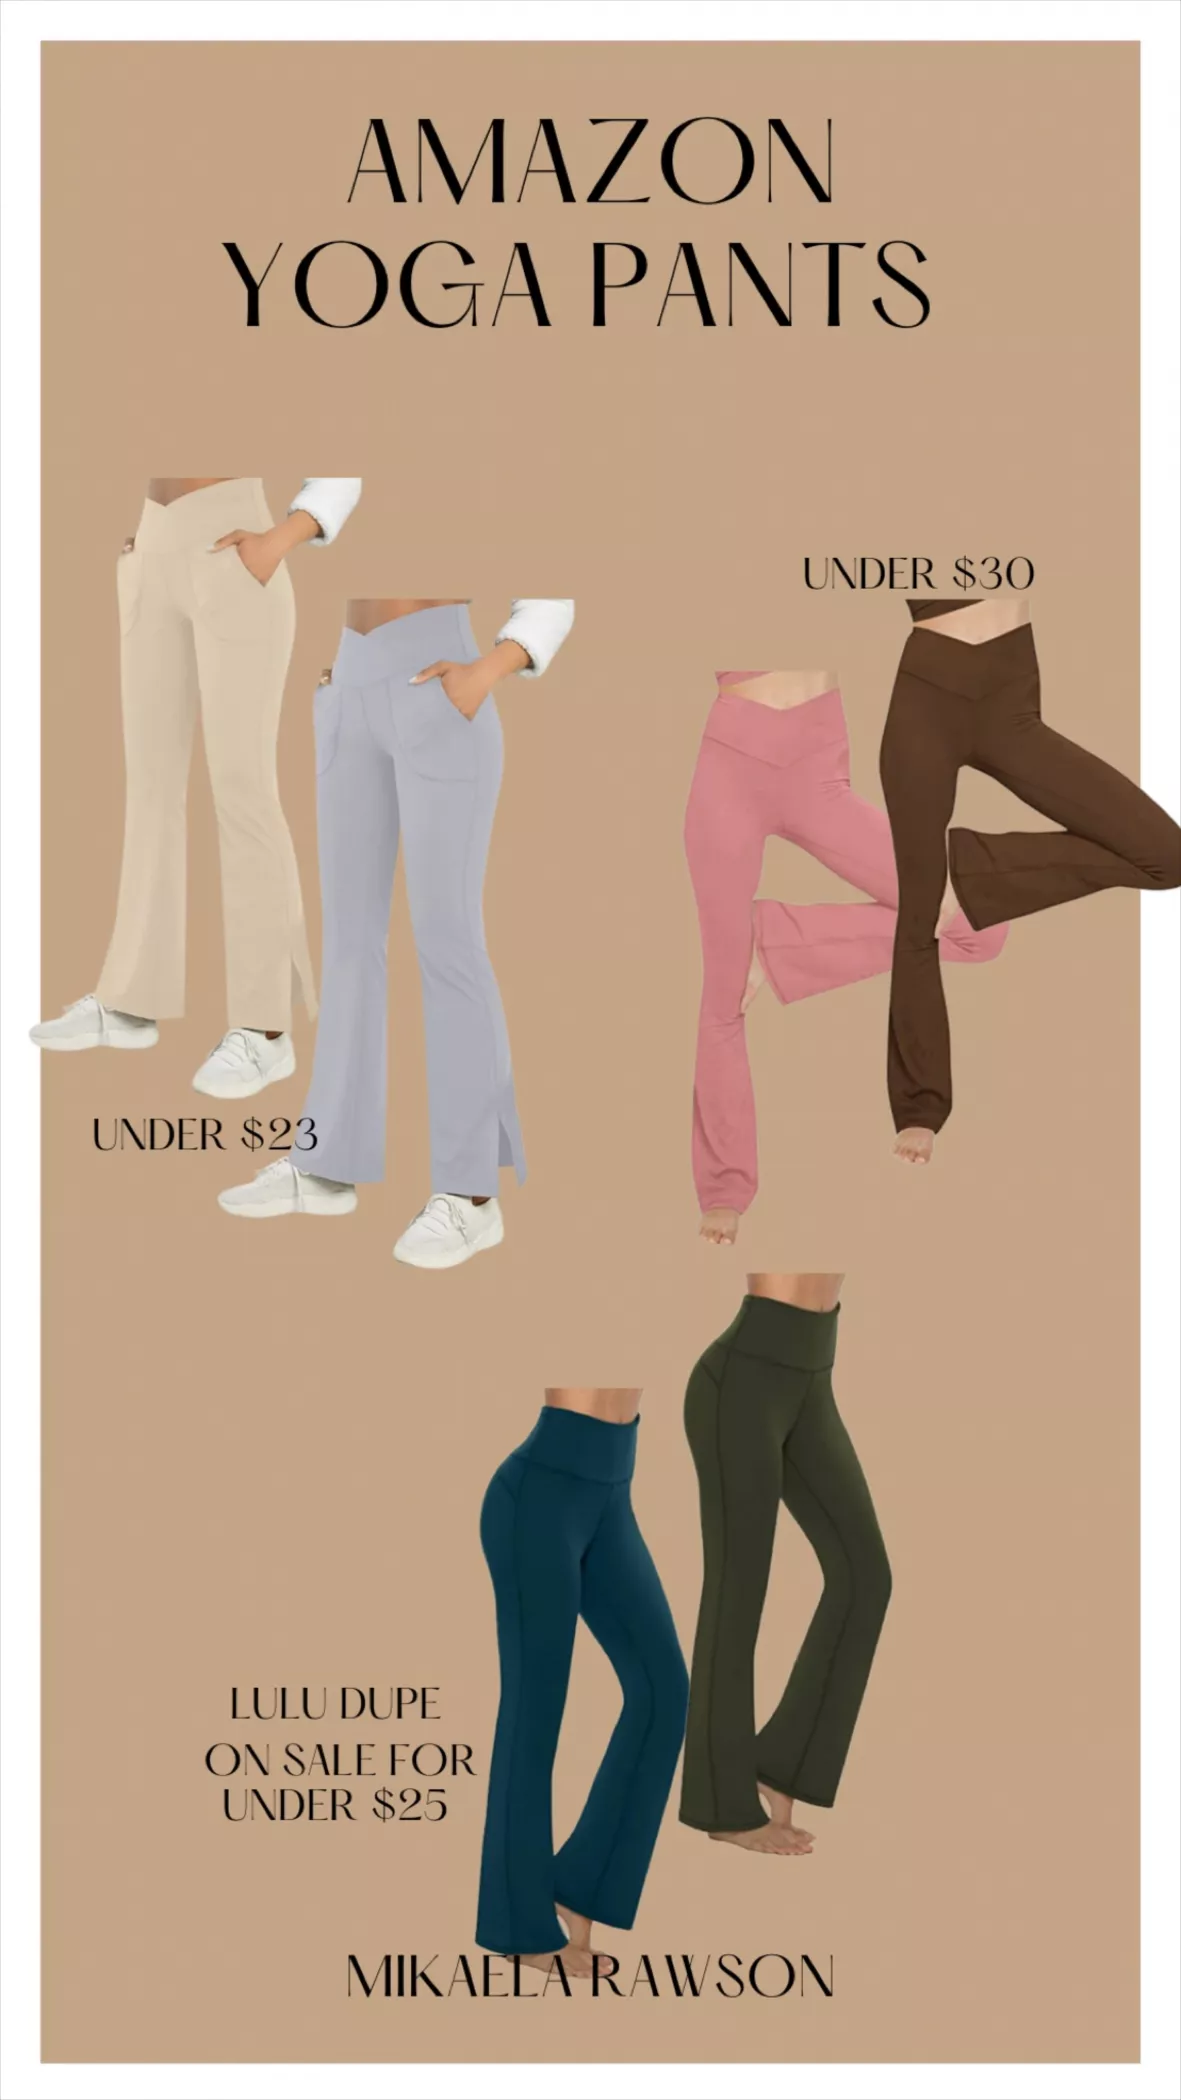 AFITNE Yoga Pants For Women Bootcut Pants